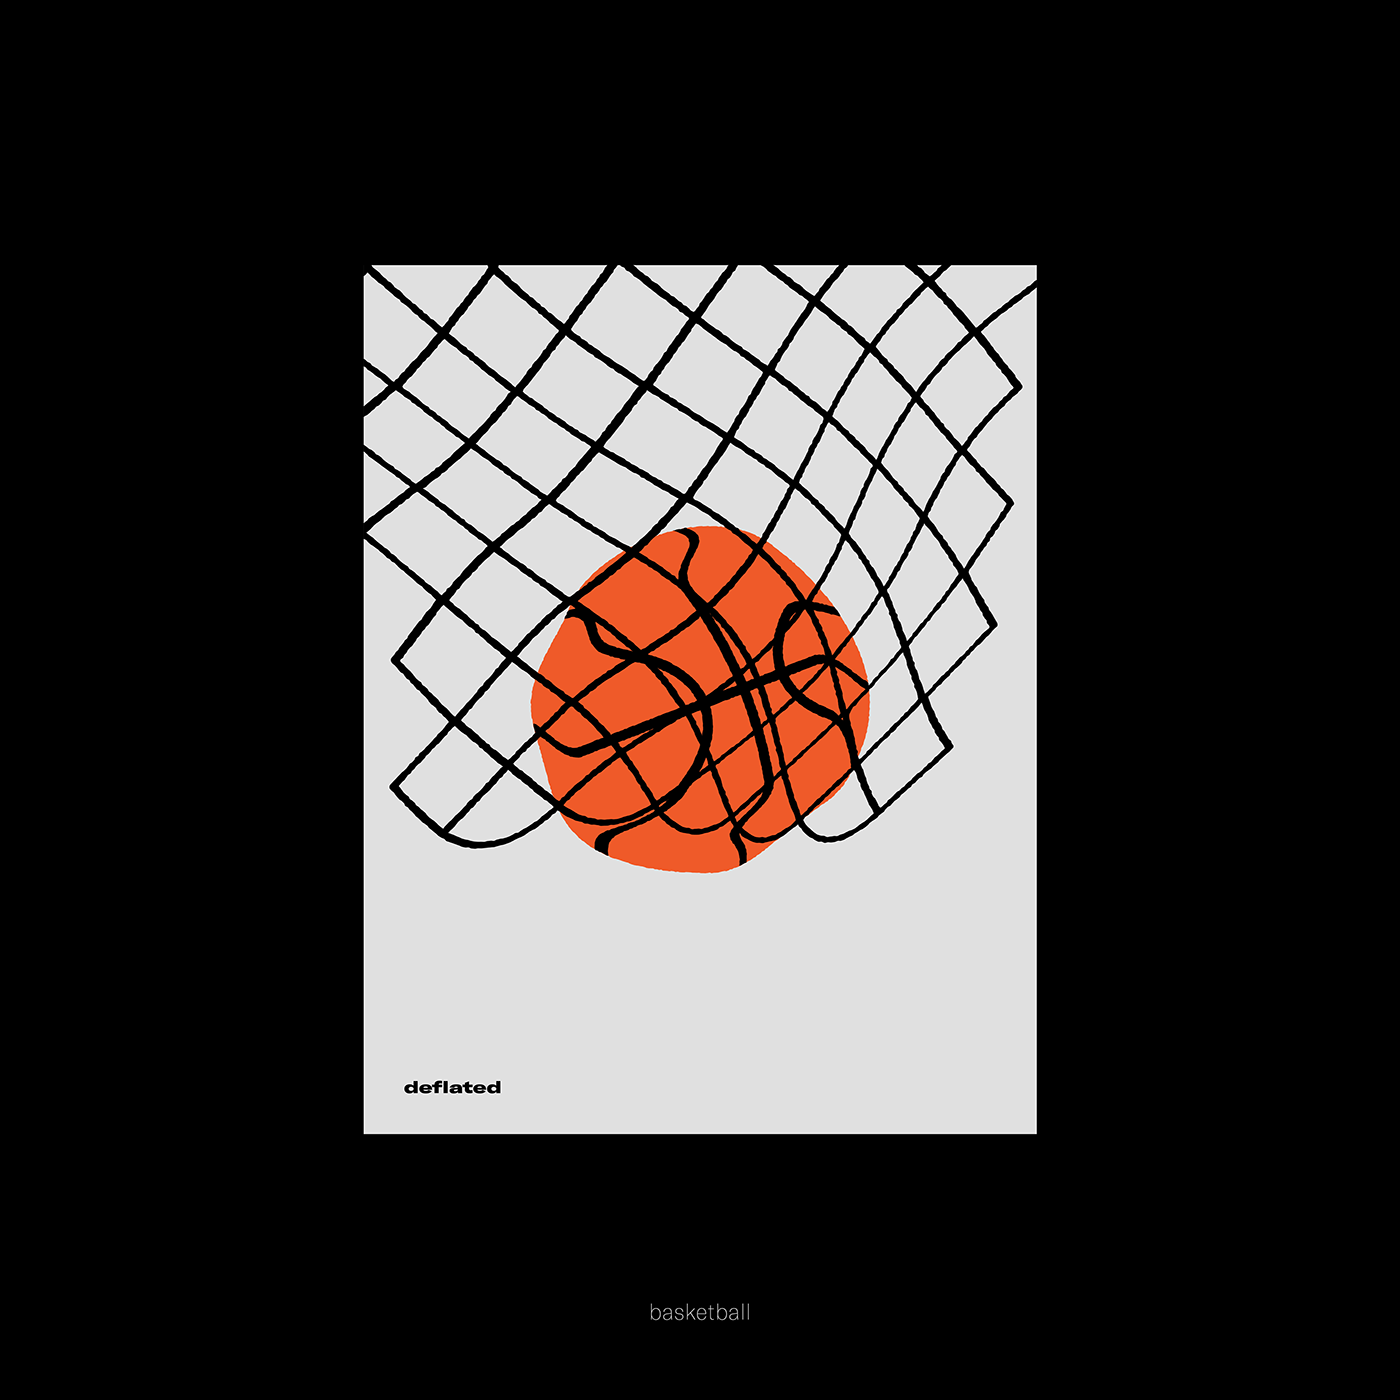 ilustracion basketball deflated melted flat simple ball Jorge Espinoza Costa Rica